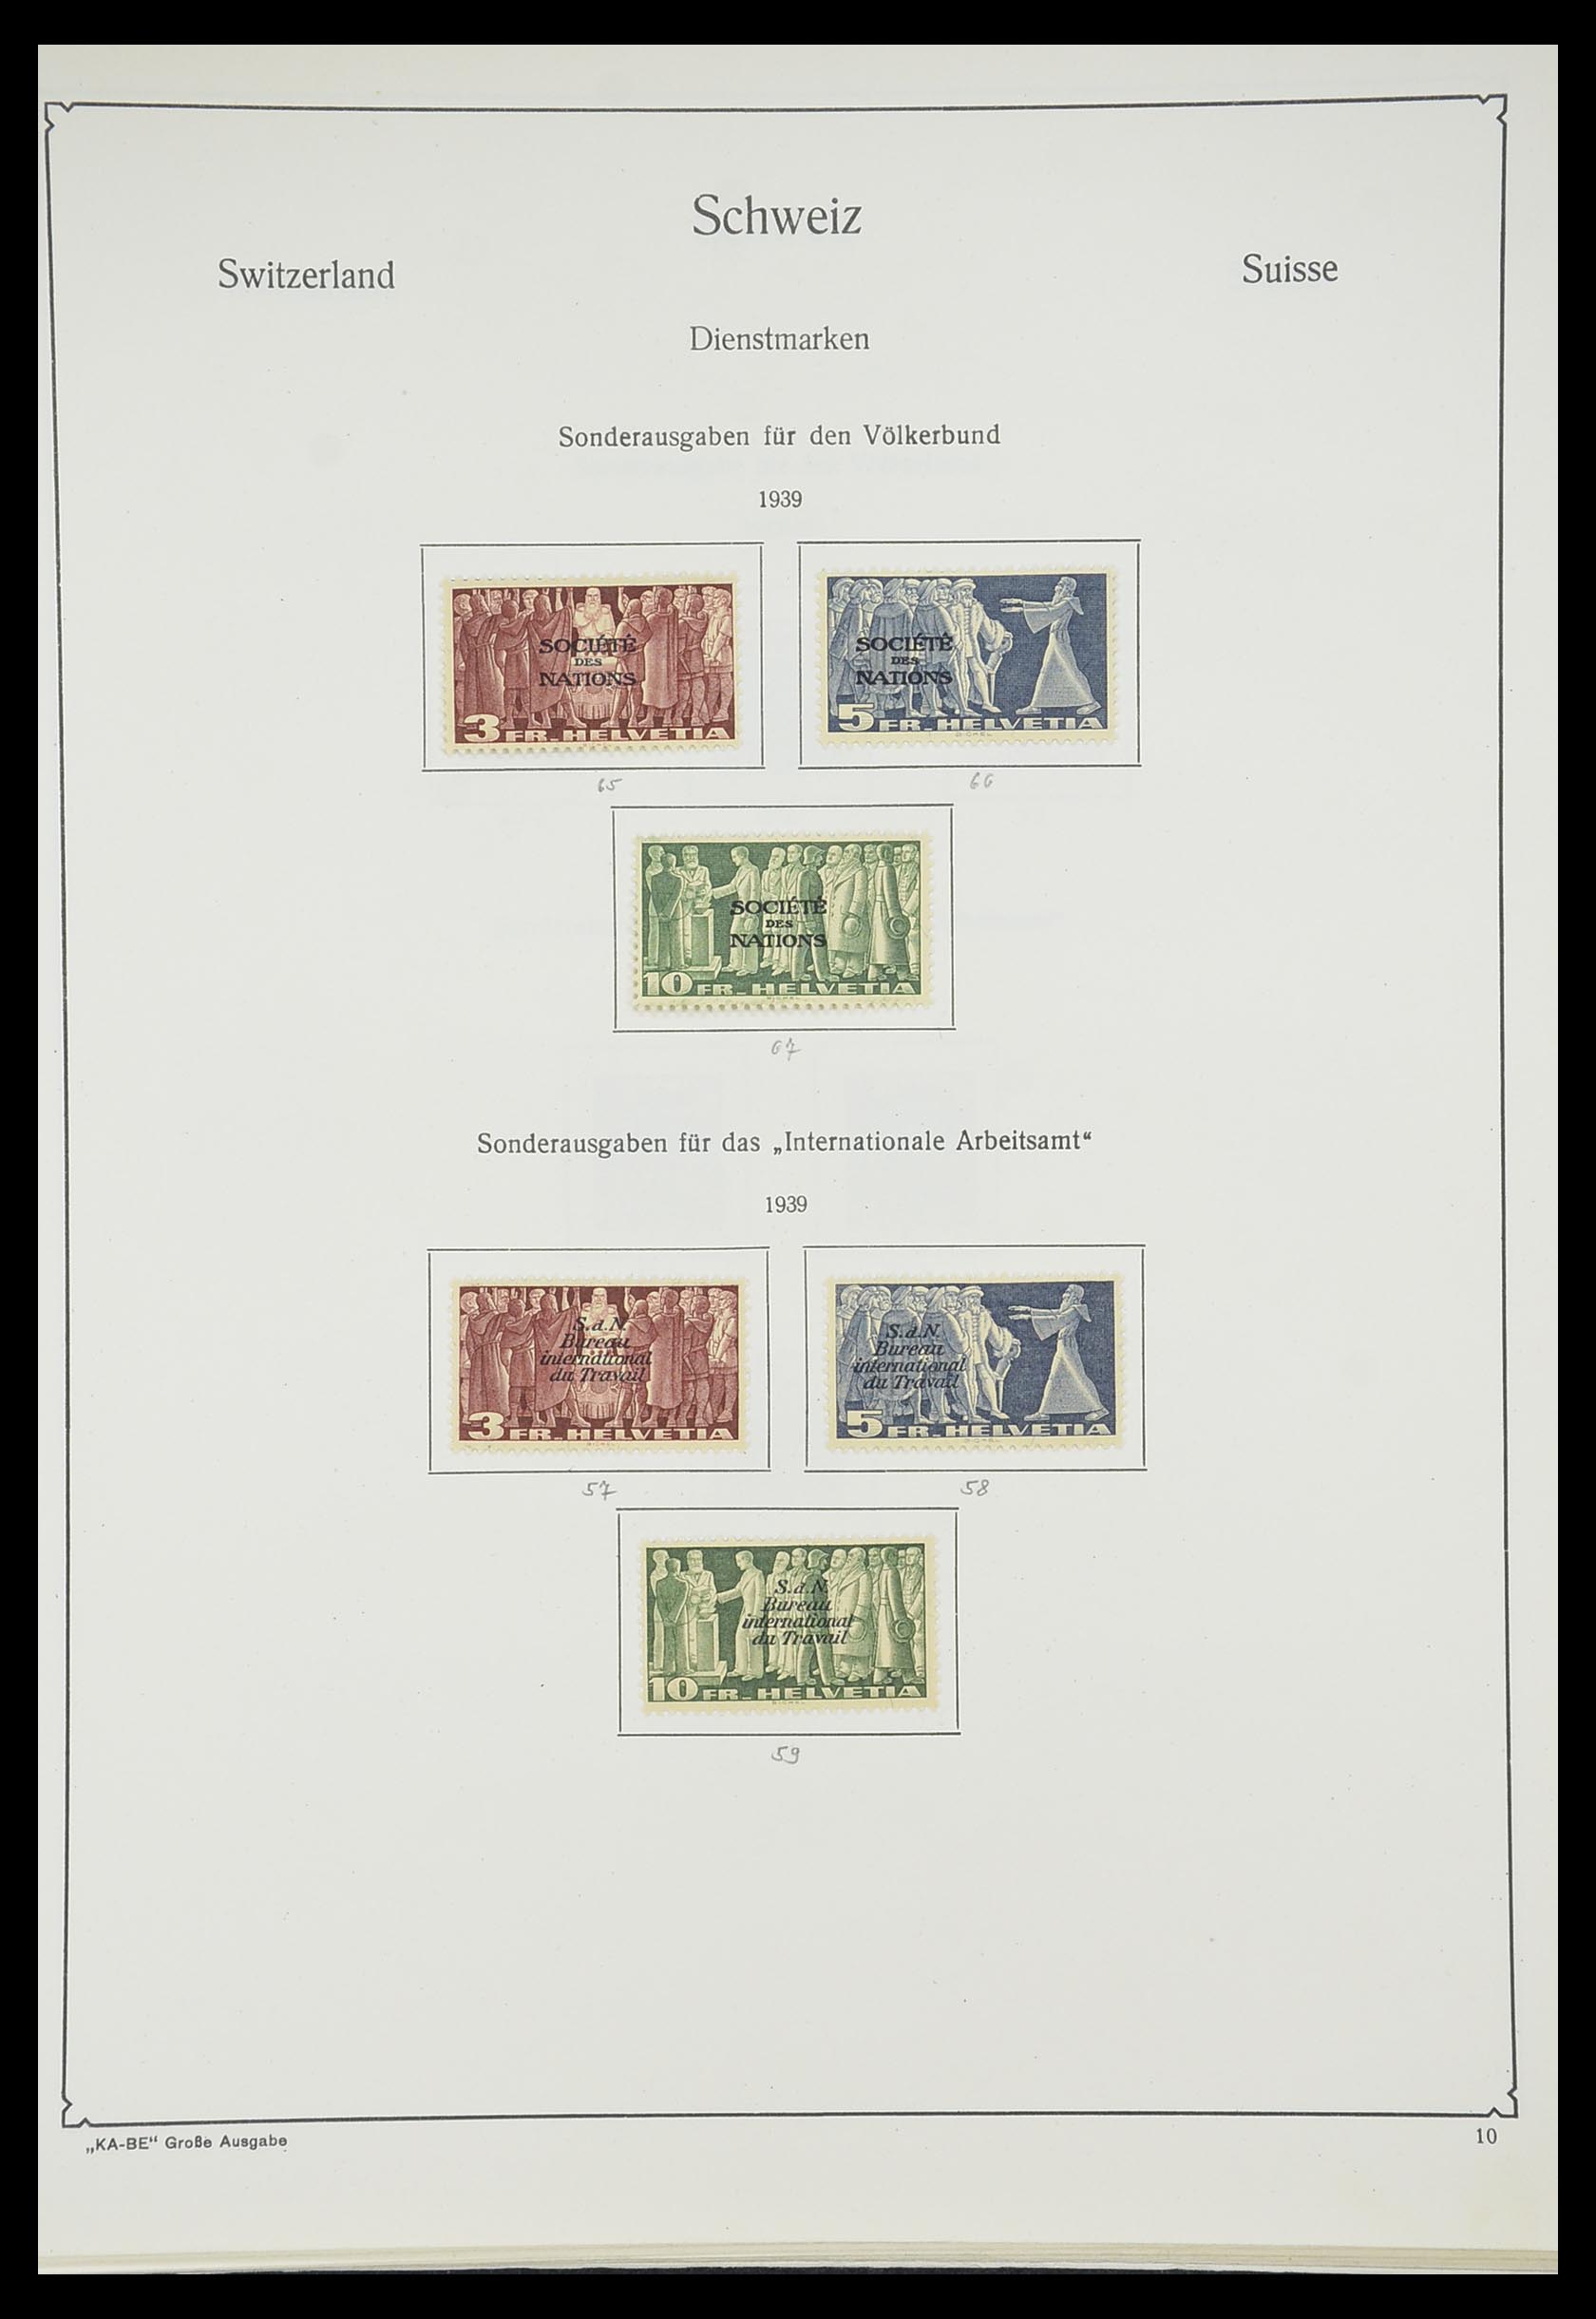 33327 011 - Stamp collection 33327 Switzerland service 1922-1989.